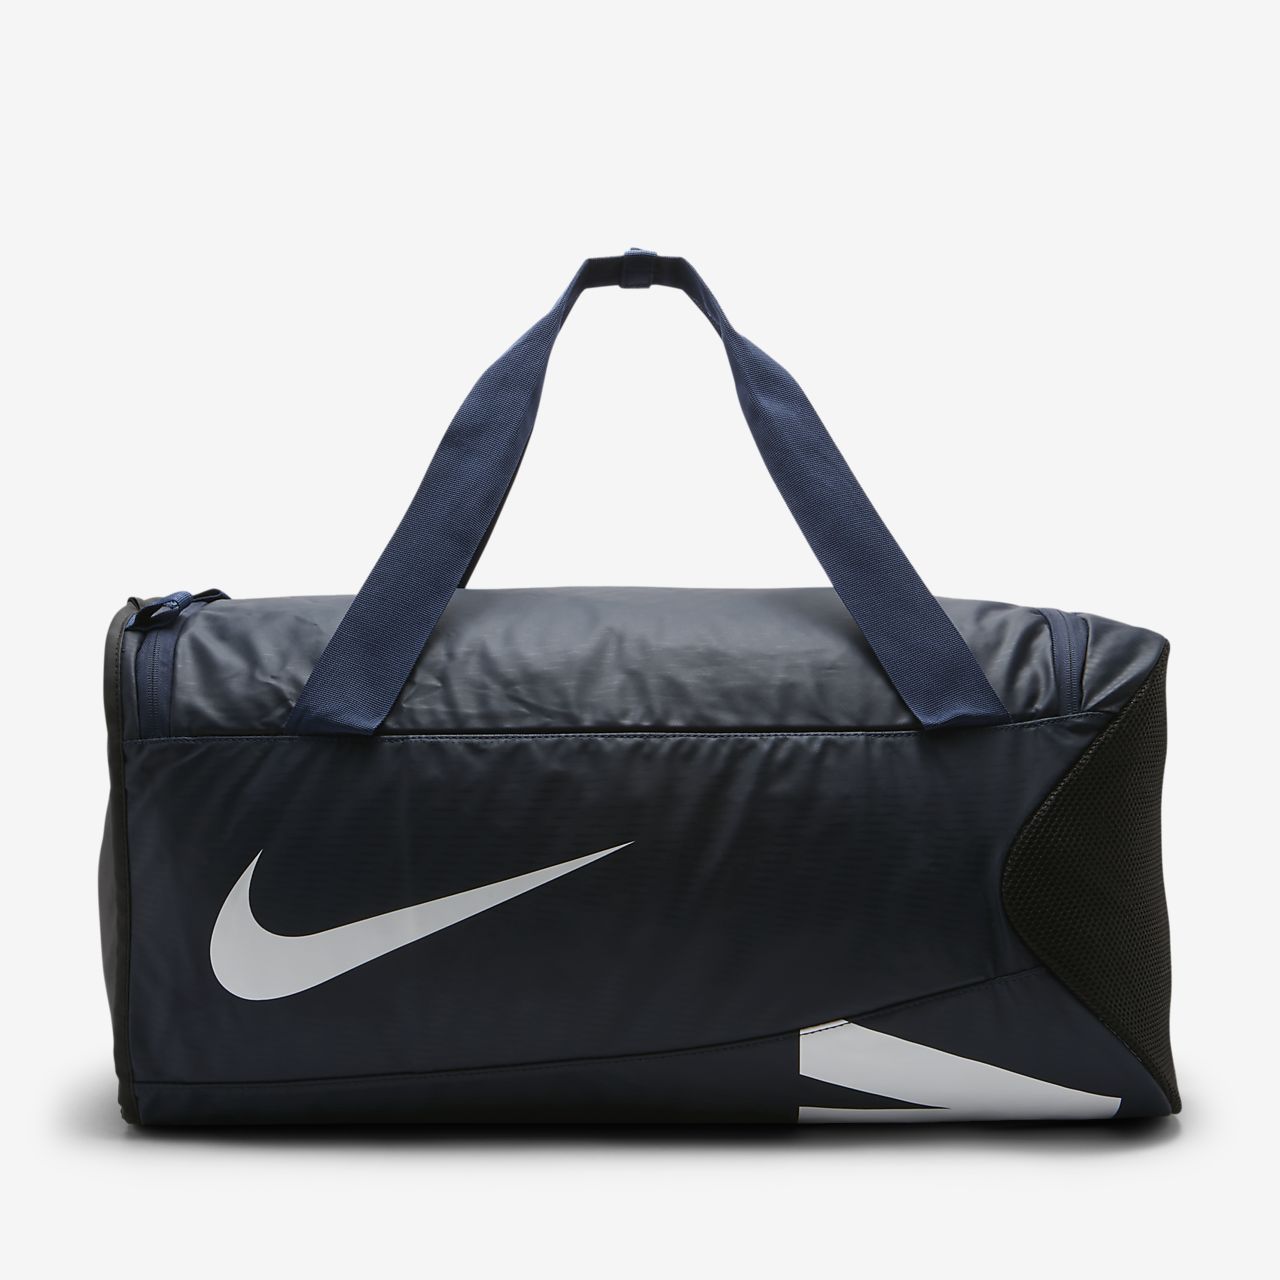 Nike Alpha Adapt Cross Body (Medium) Duffel Bag. www.semadata.org VN